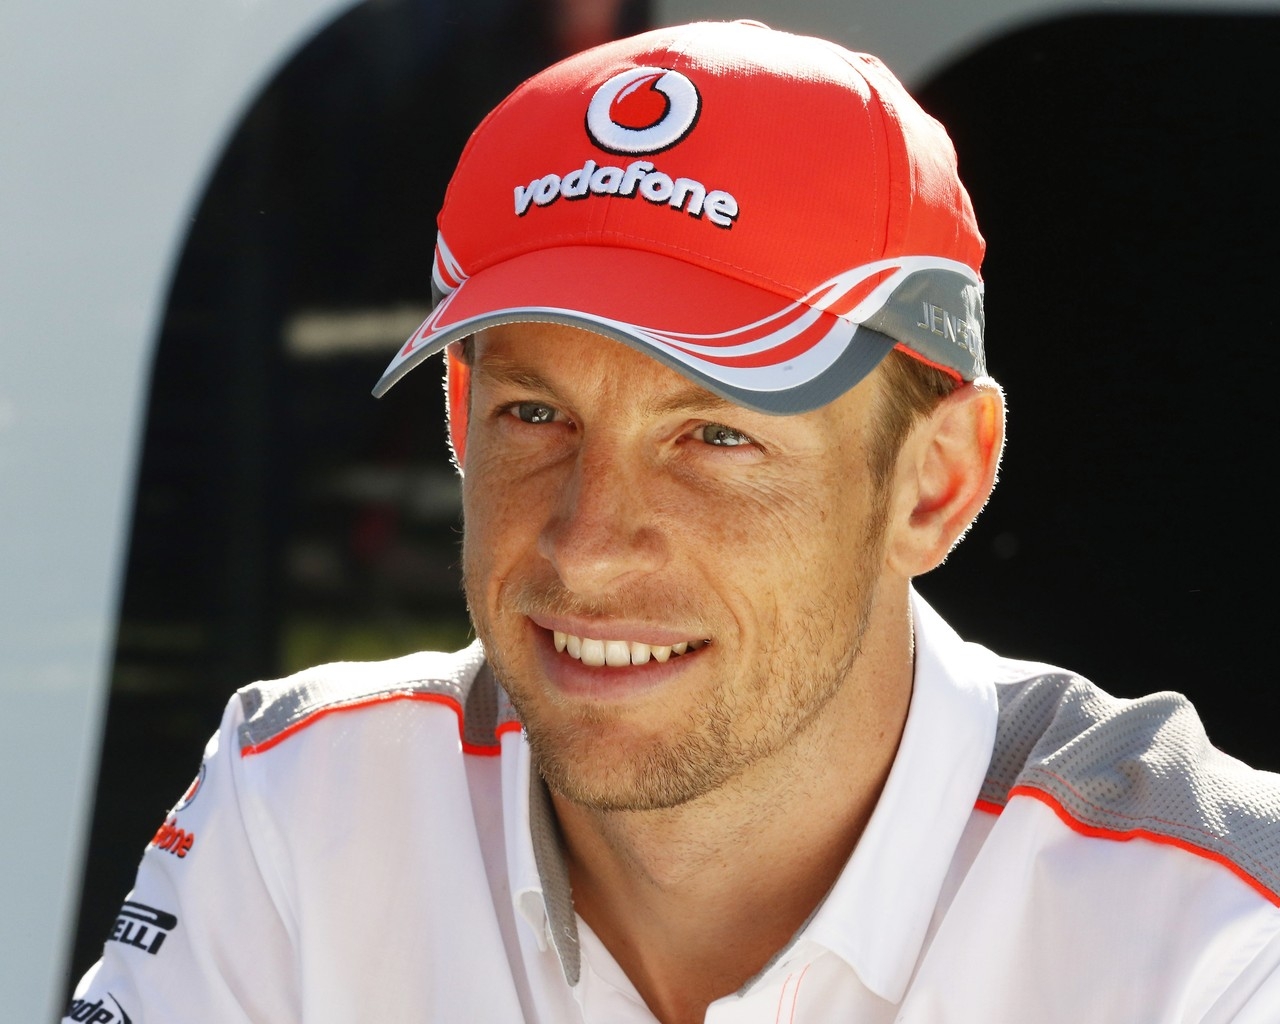 Jenson Button Vodafone for 1280 x 1024 resolution